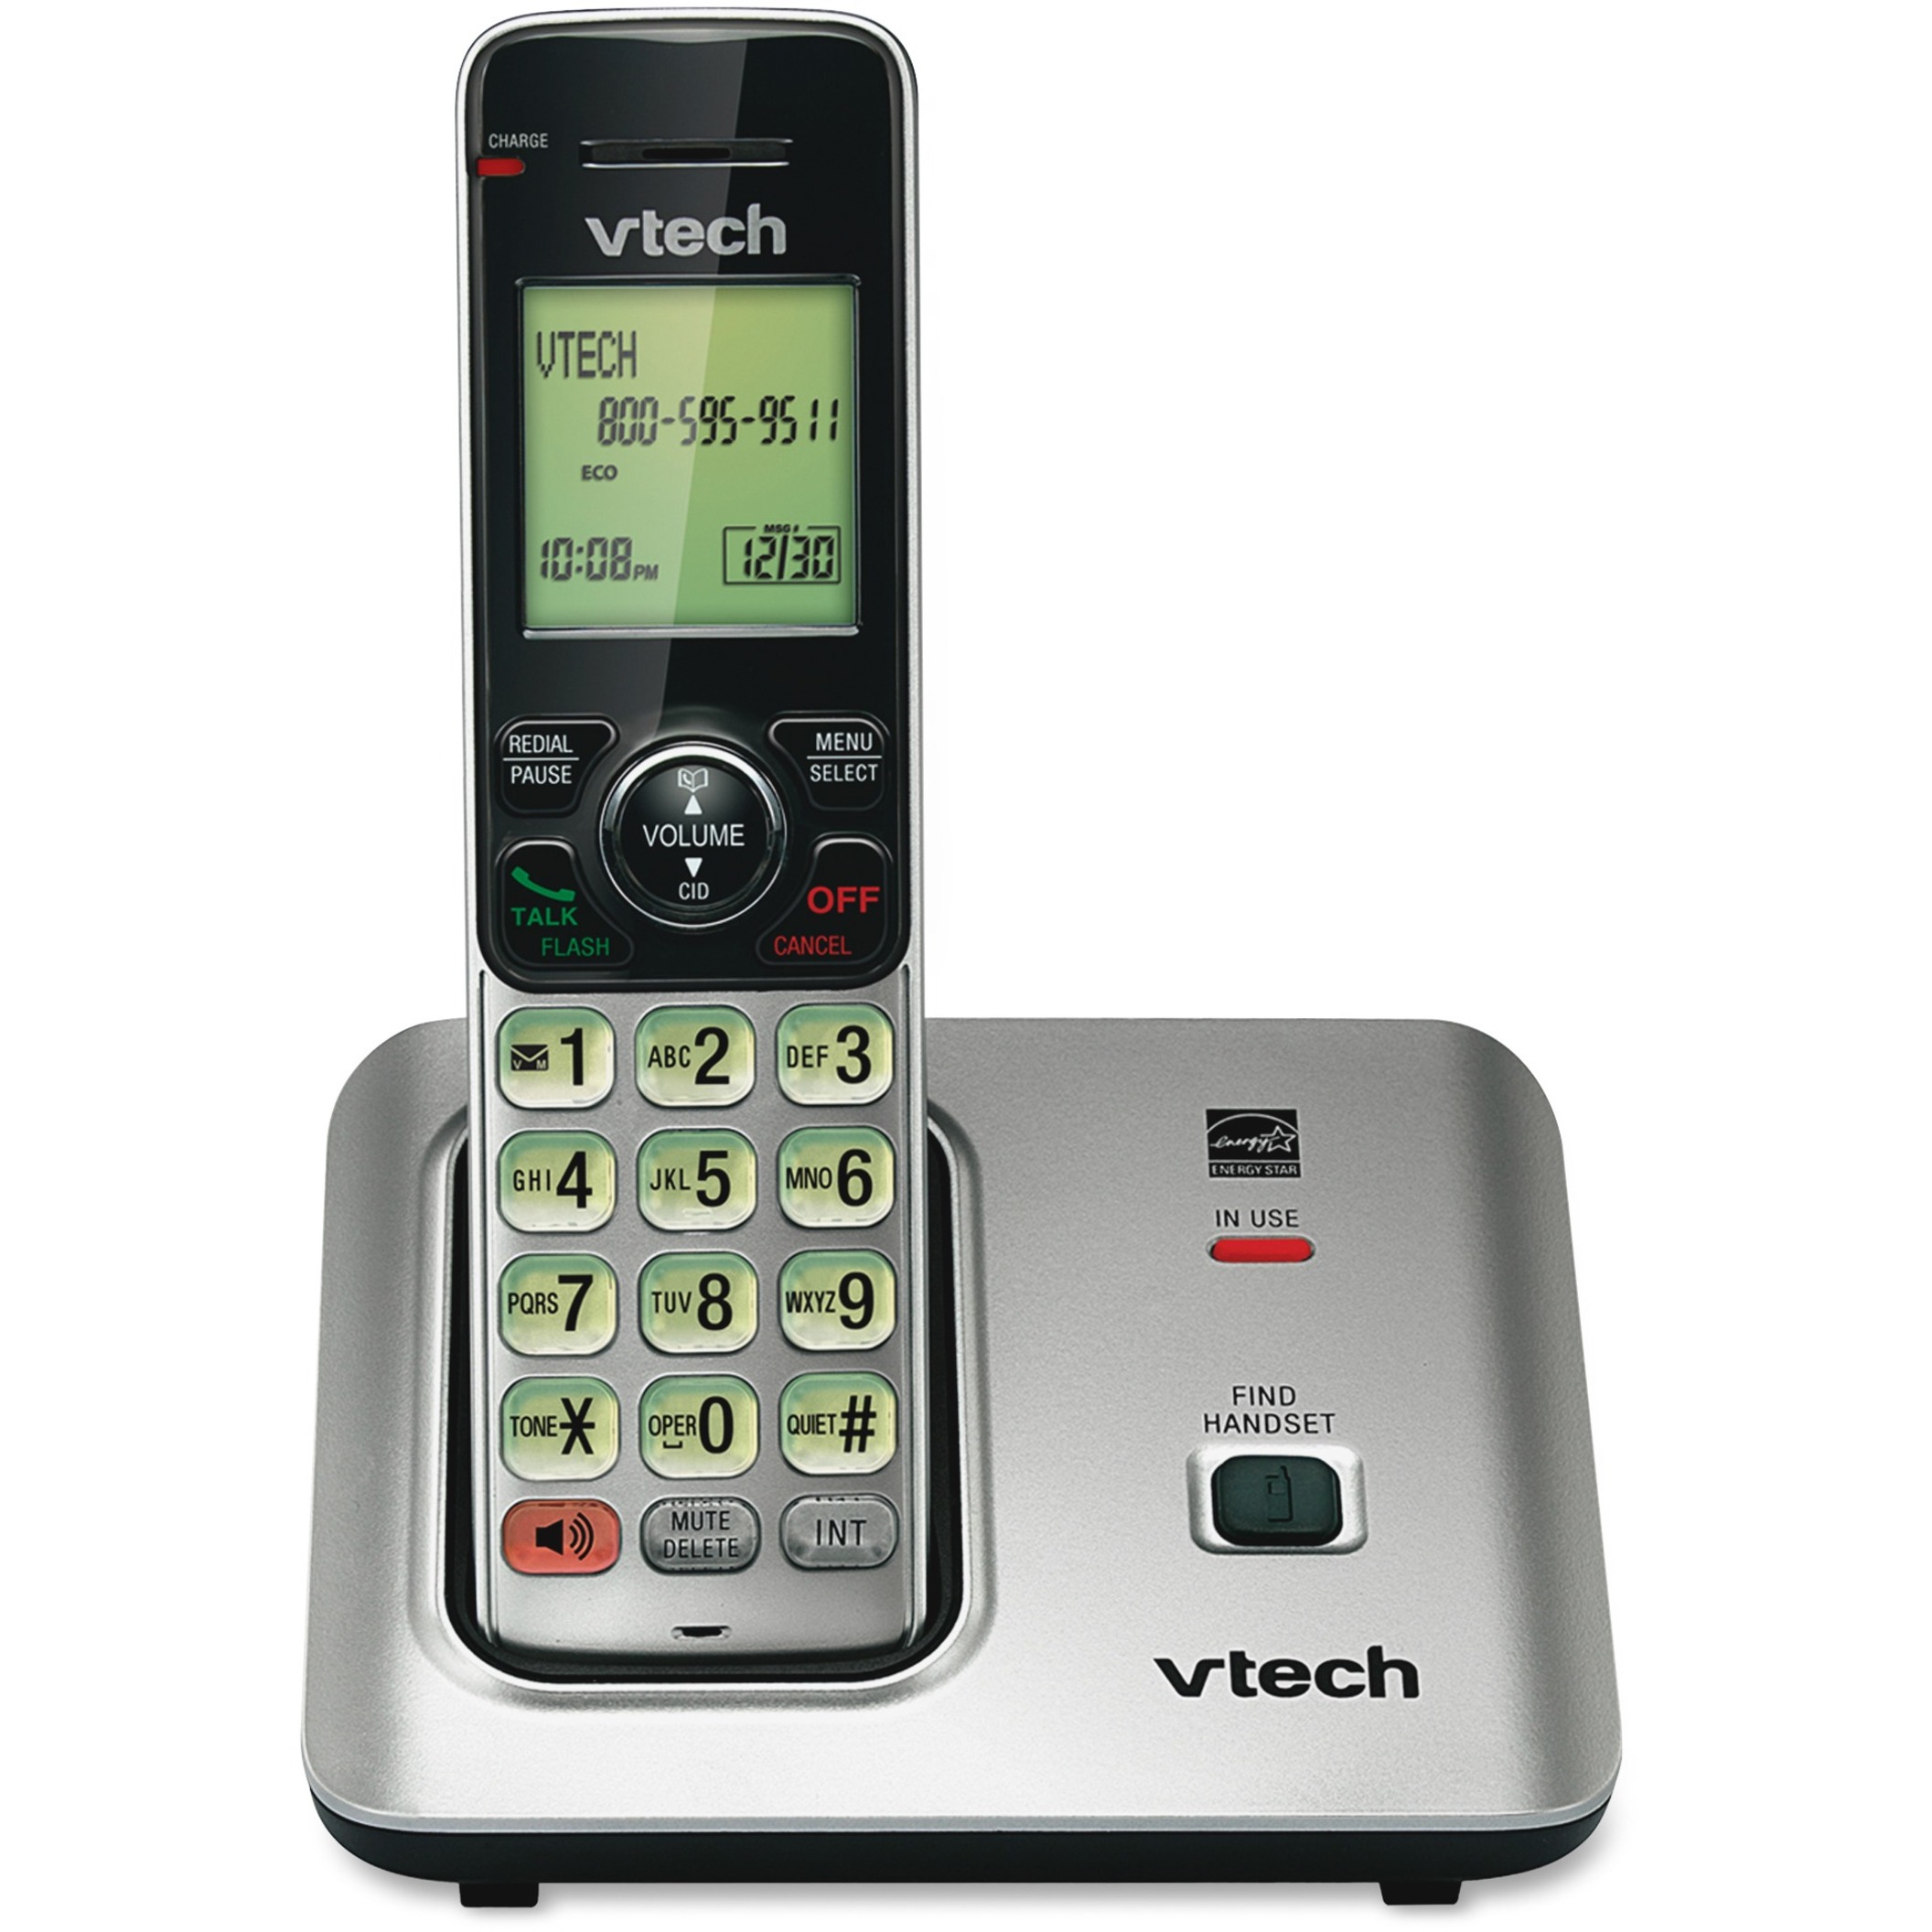 Vtech Cs6619 Cordless Phone System CS6619 - image 1 of 2